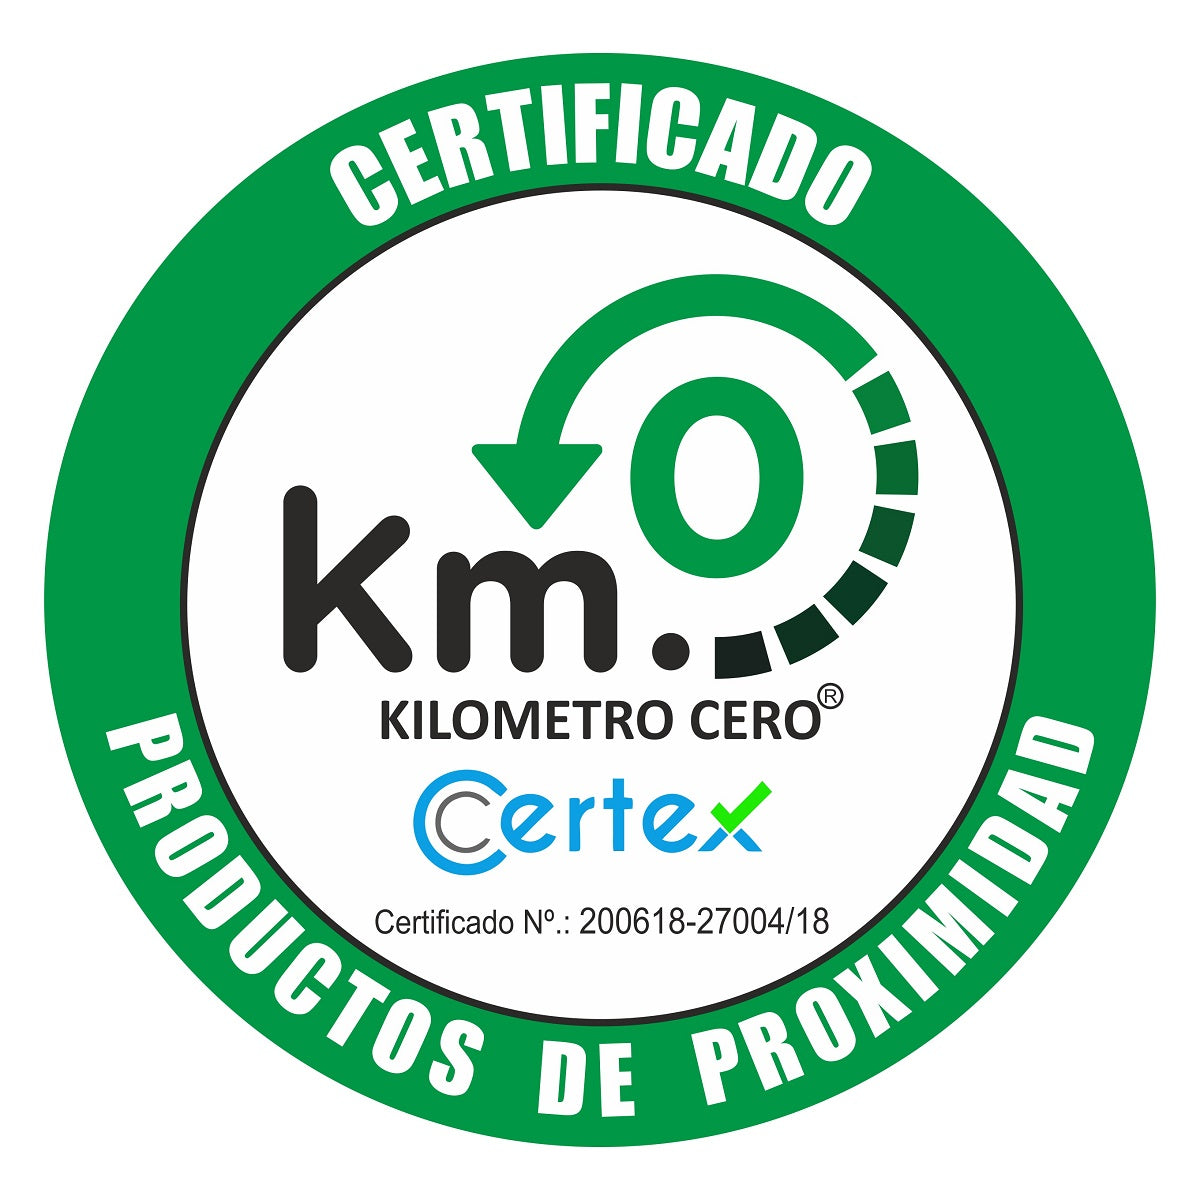 Kilometro Cero km.0 certification locally grown by local farmers